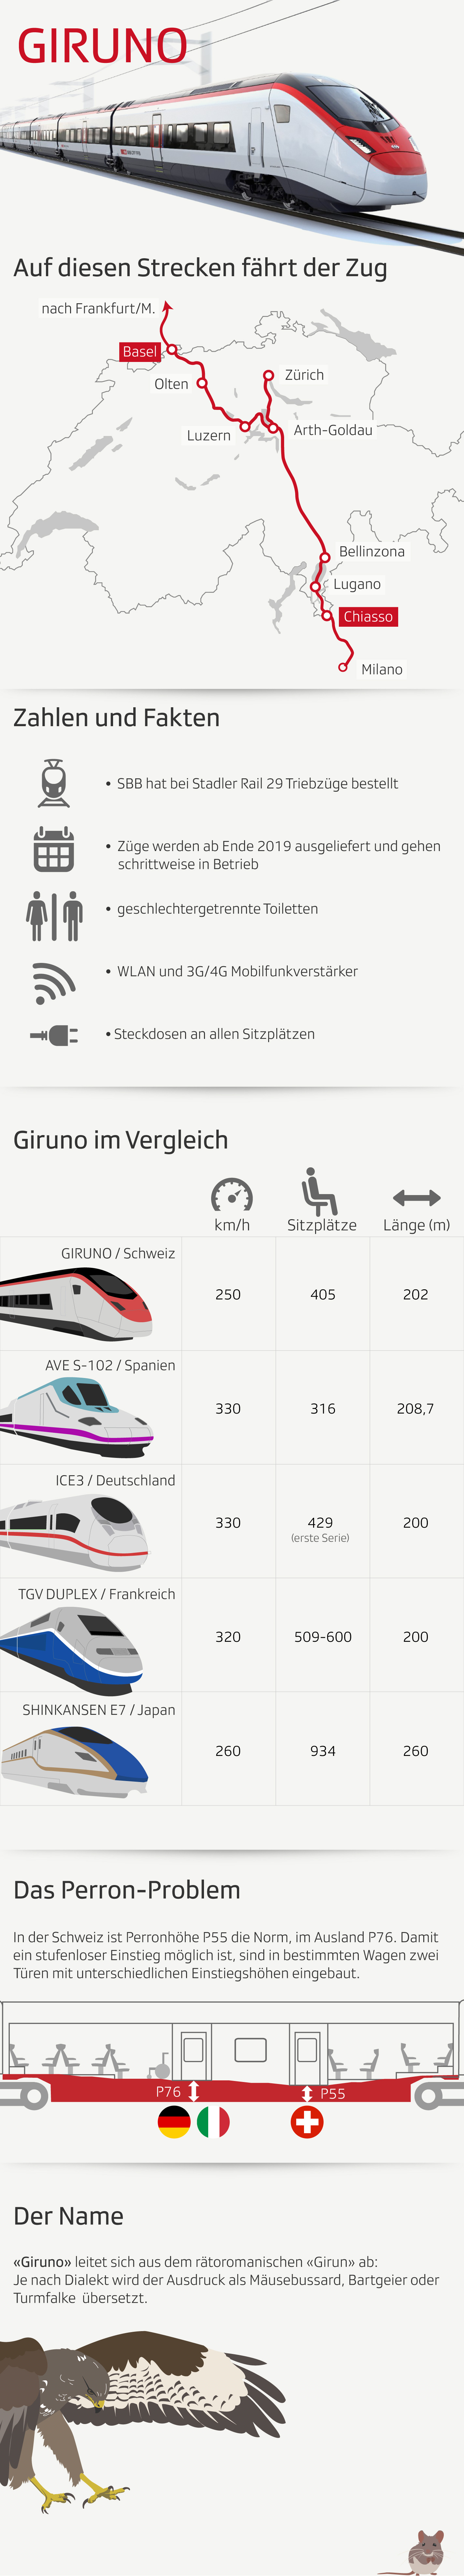 Neuer Zug Am Gotthard Freie Fahrt Fur Sbb Hochgeschwindigkeitszug Giruno News Srf